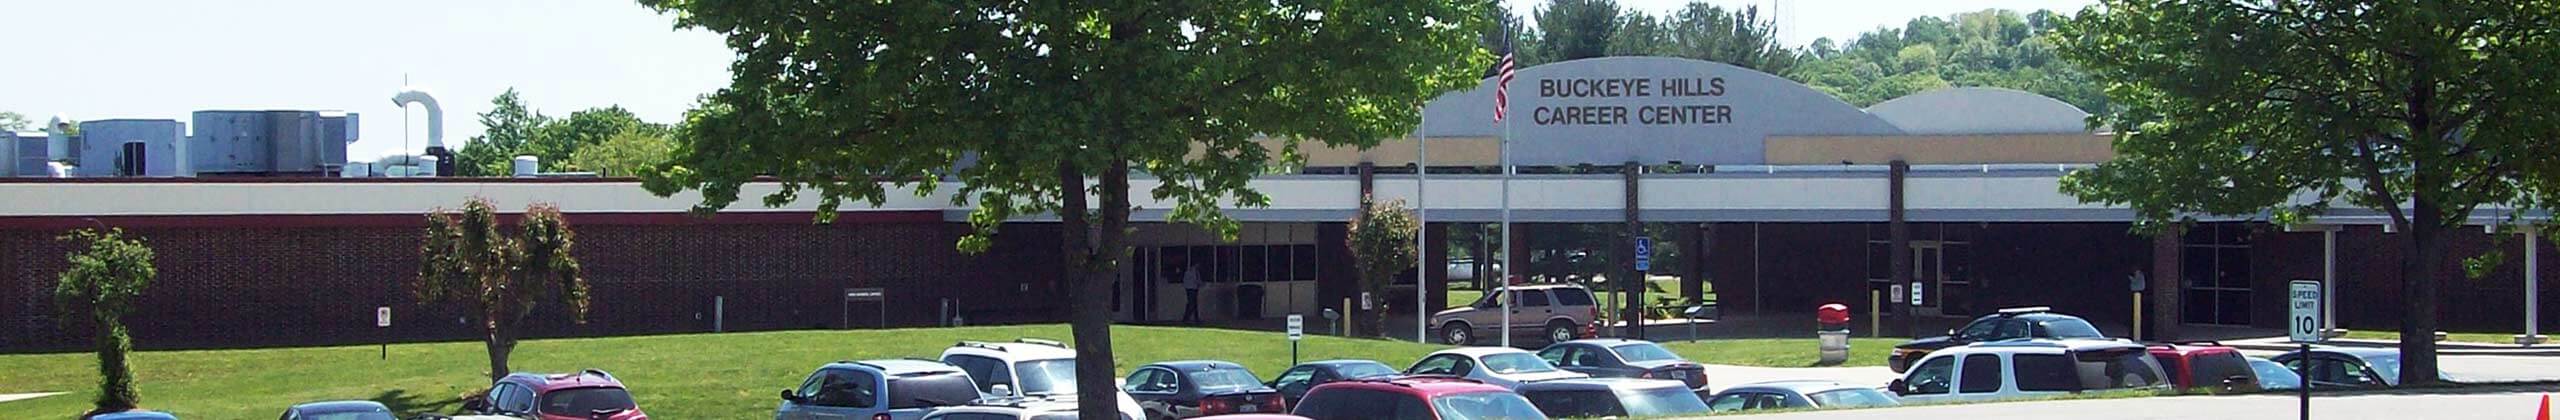 Buckeye Hills Career Center